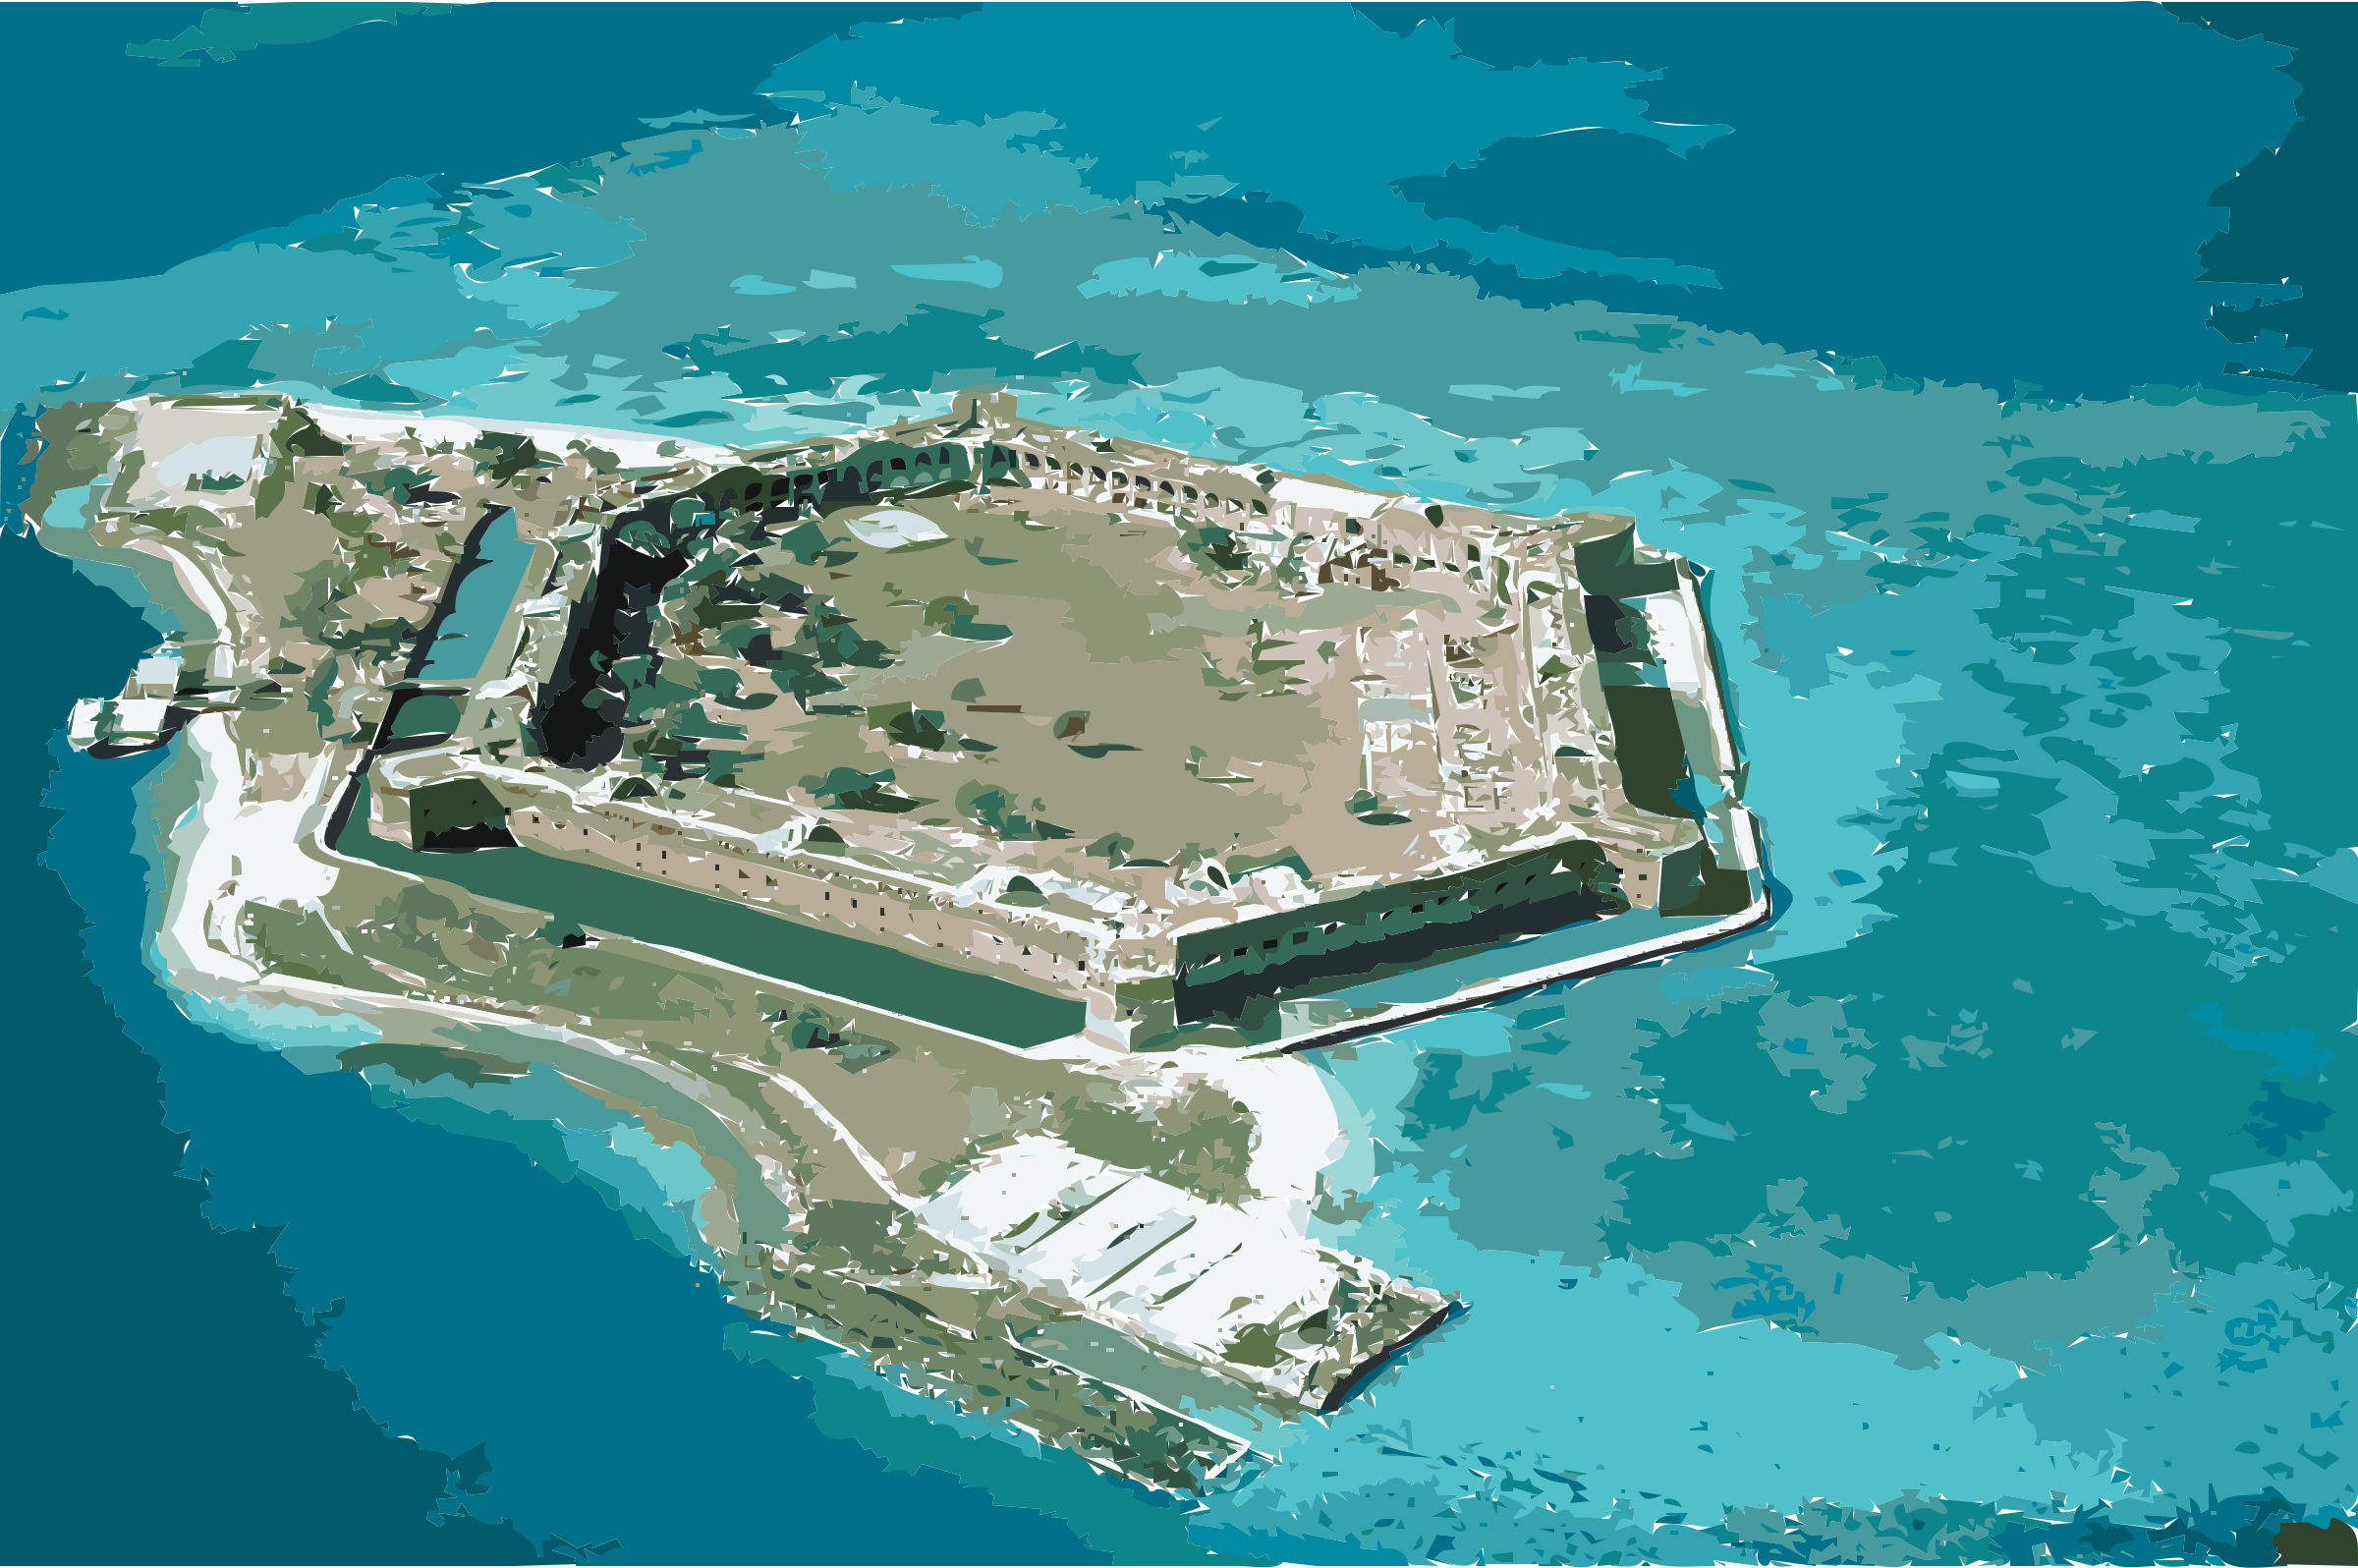 Island clipart island landform. Fort jefferson dry tortugas